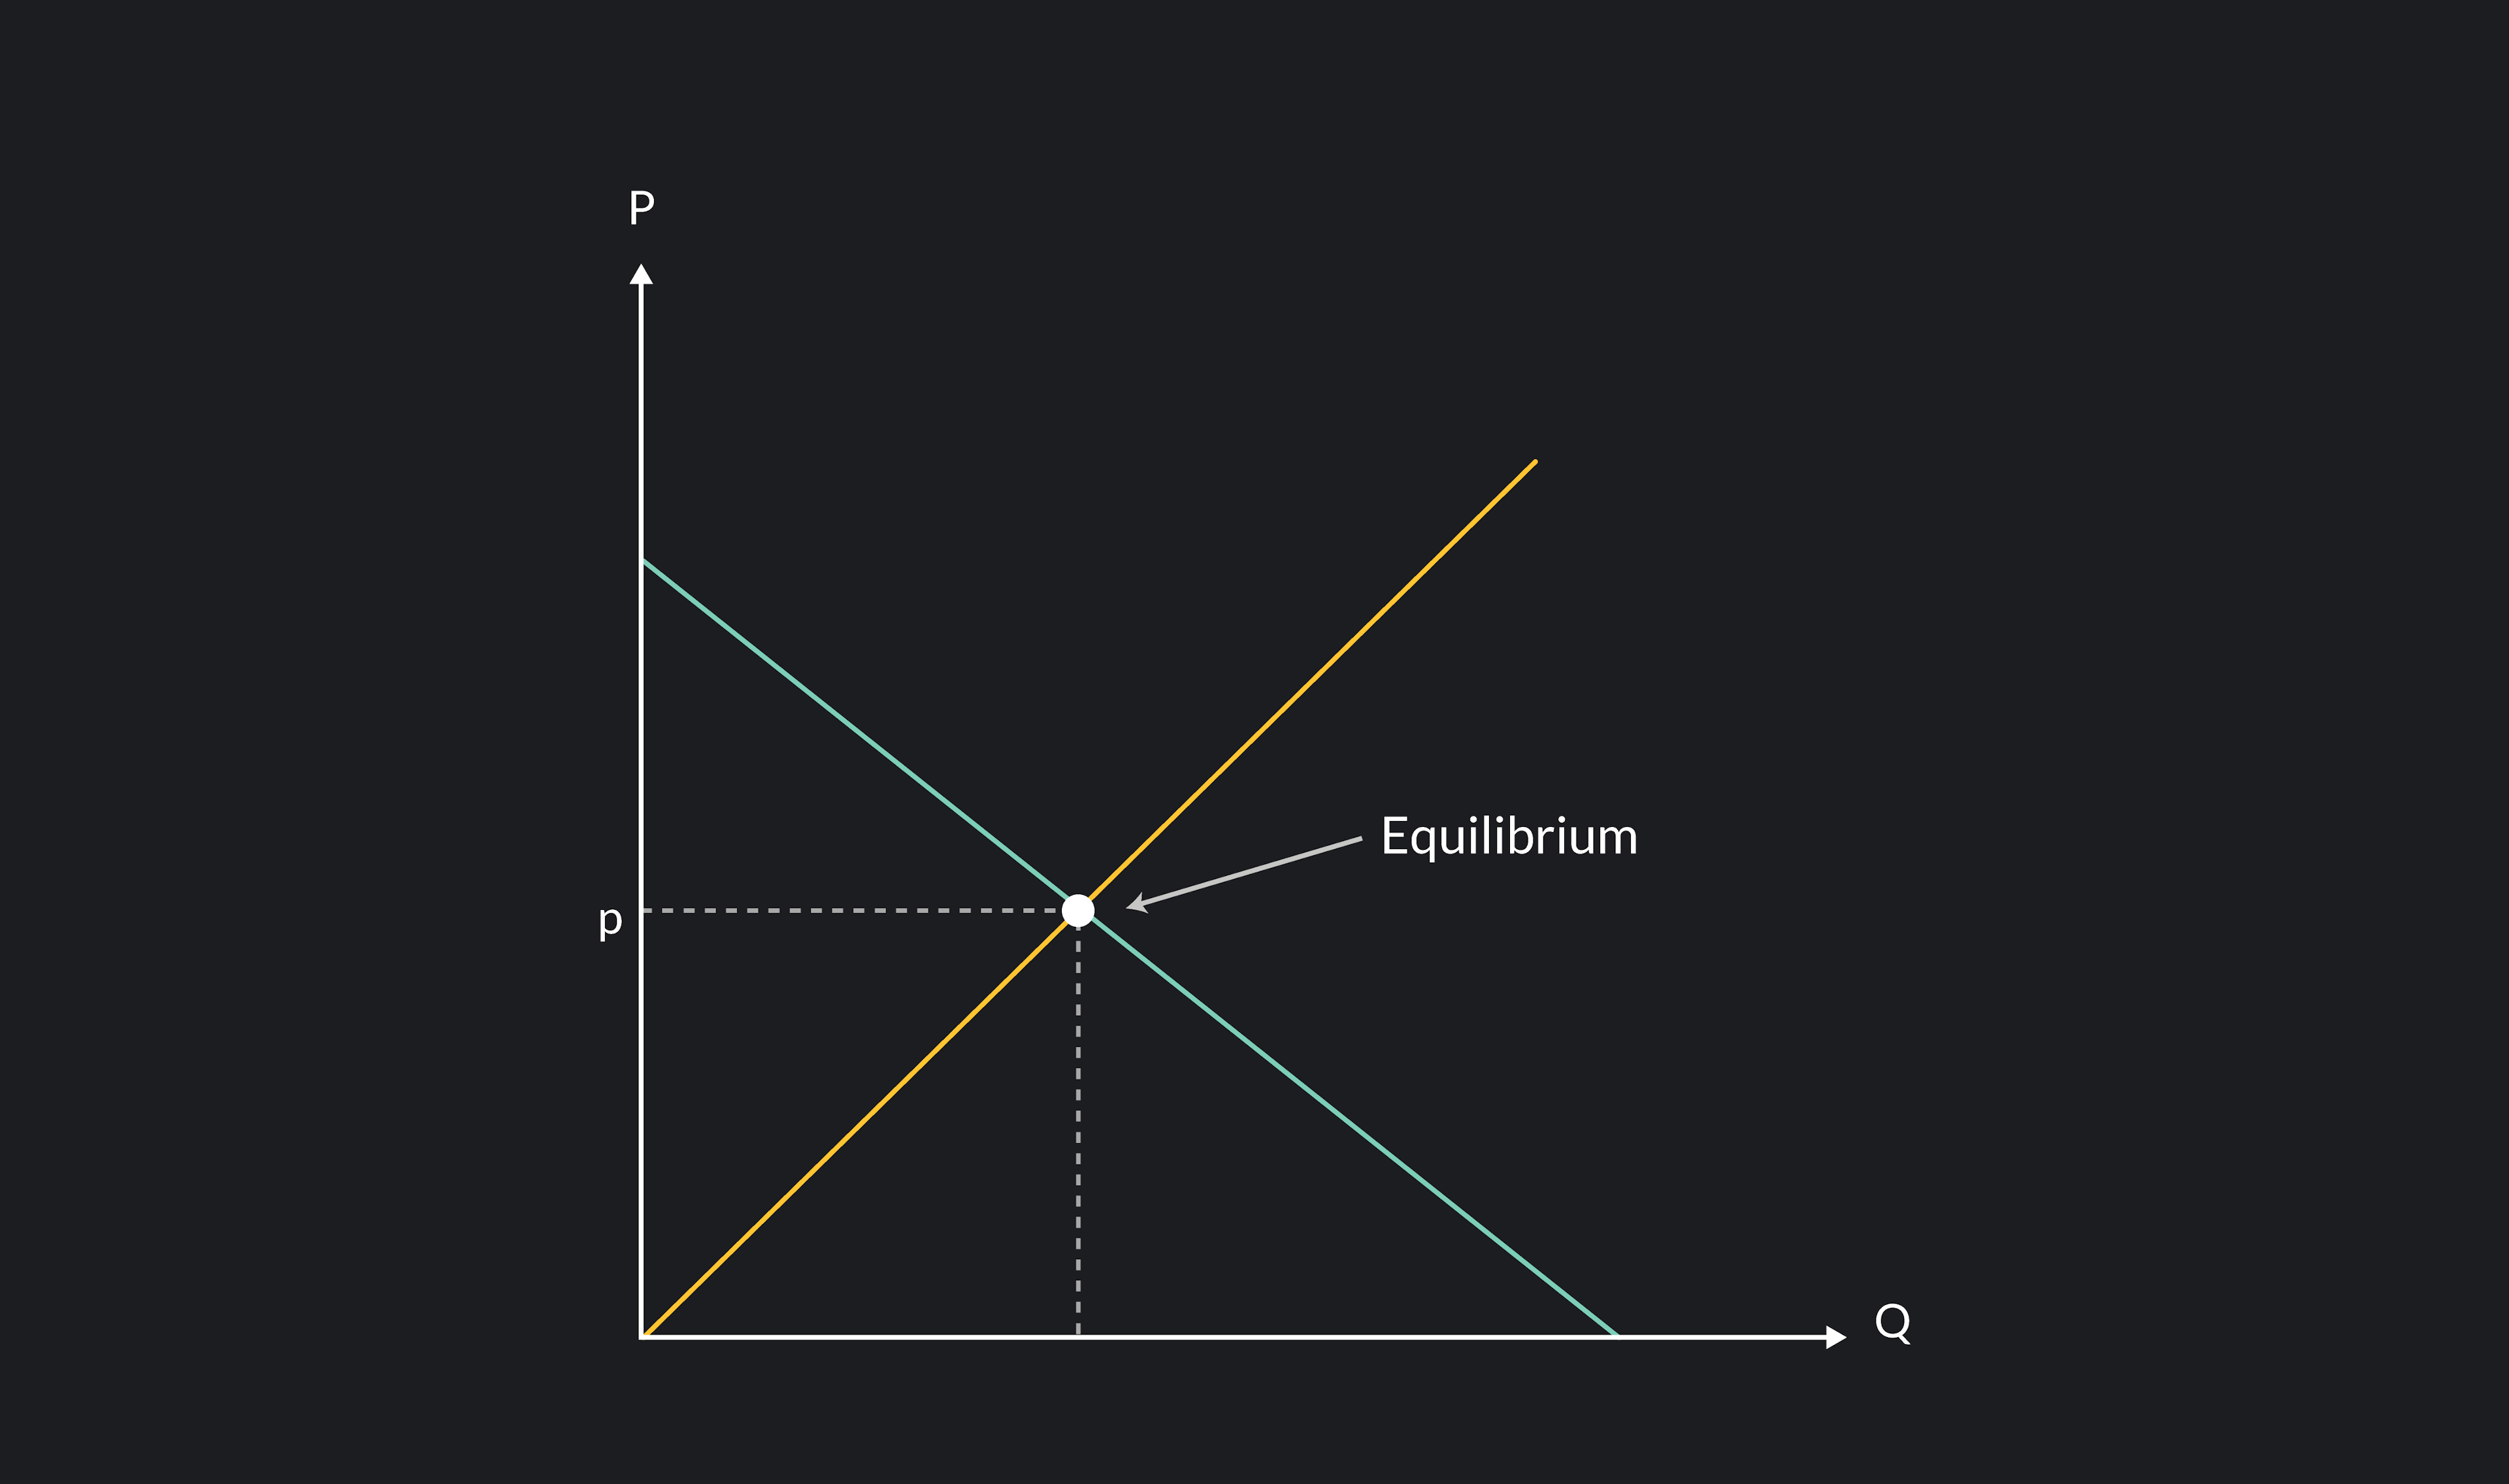 Graph showing Equilibrium Price